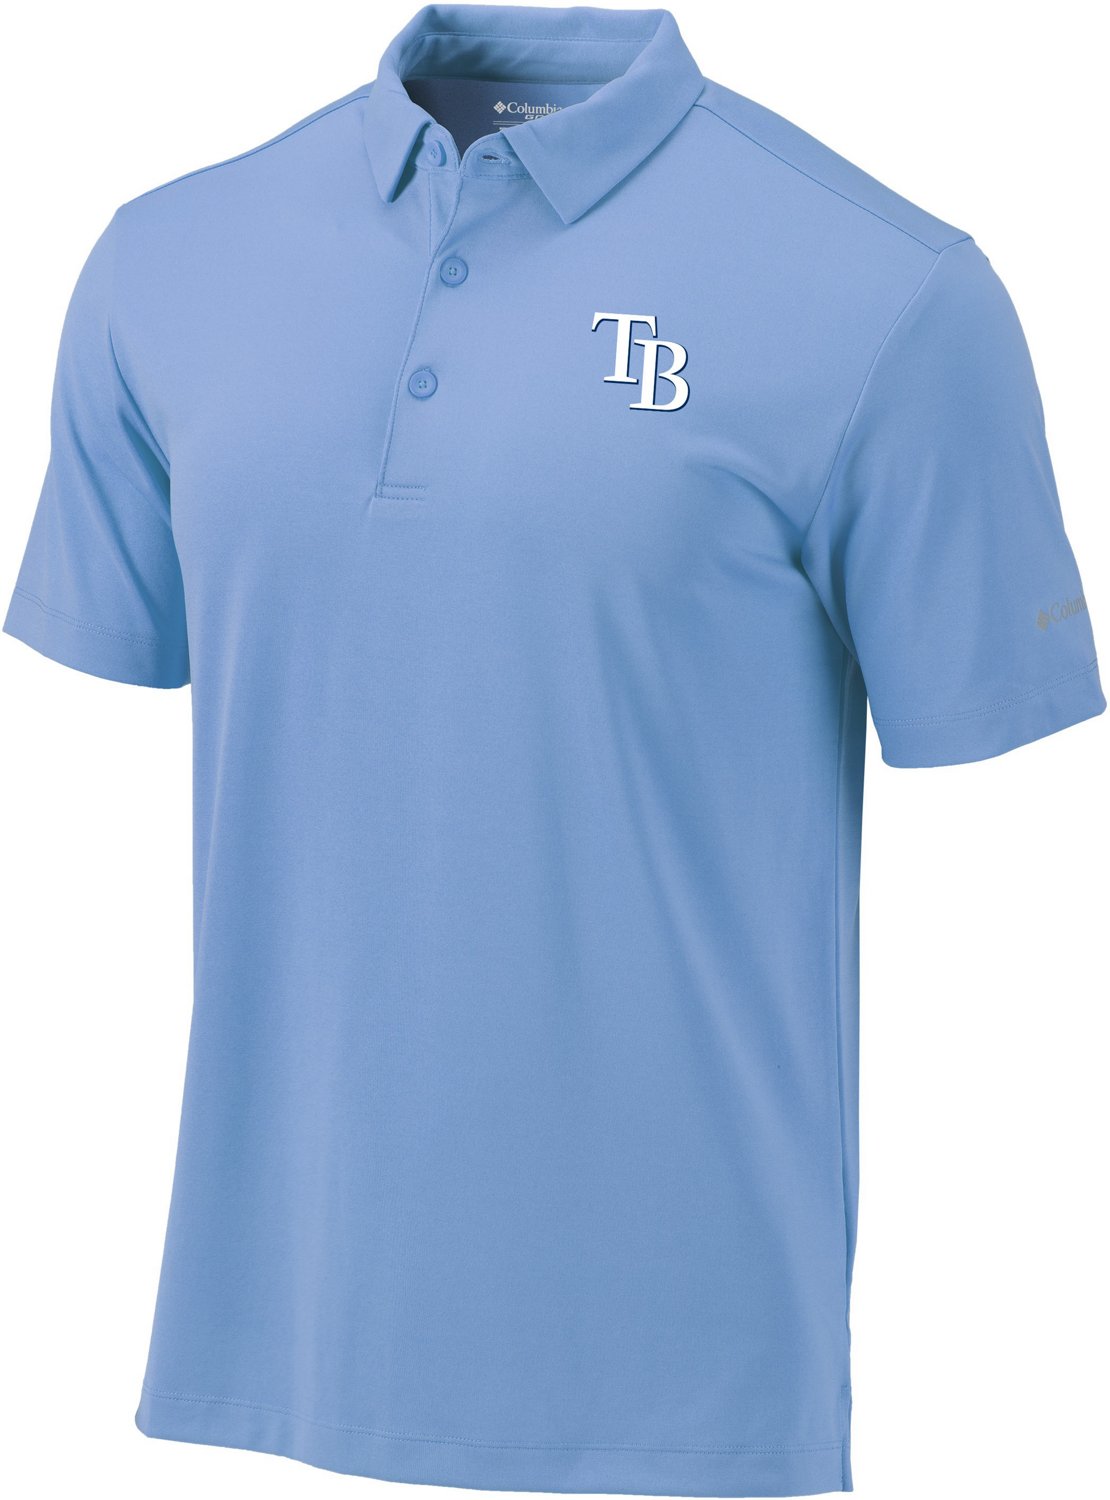 Columbia Sportswear Men's Tampa Bay Rays Drive Polo Shirt